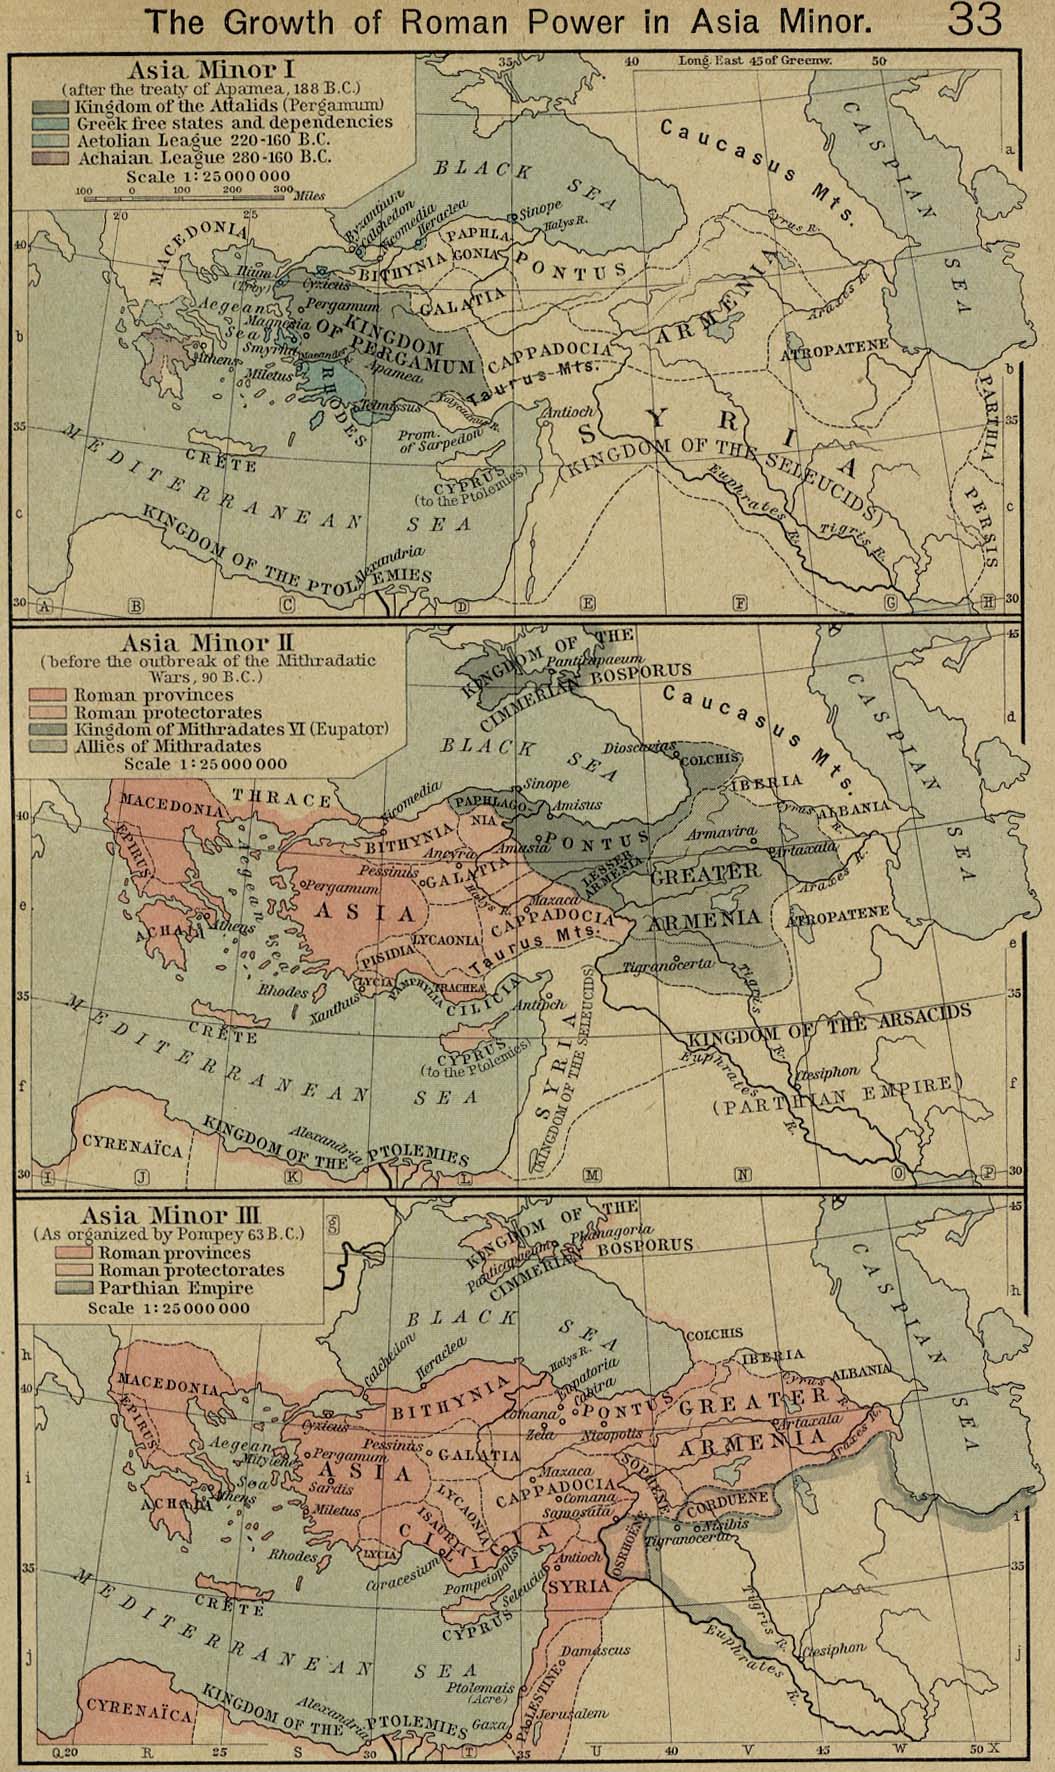 http://www.lib.utexas.edu/maps/historical/shepherd/asia_minor_roman_power.jpg